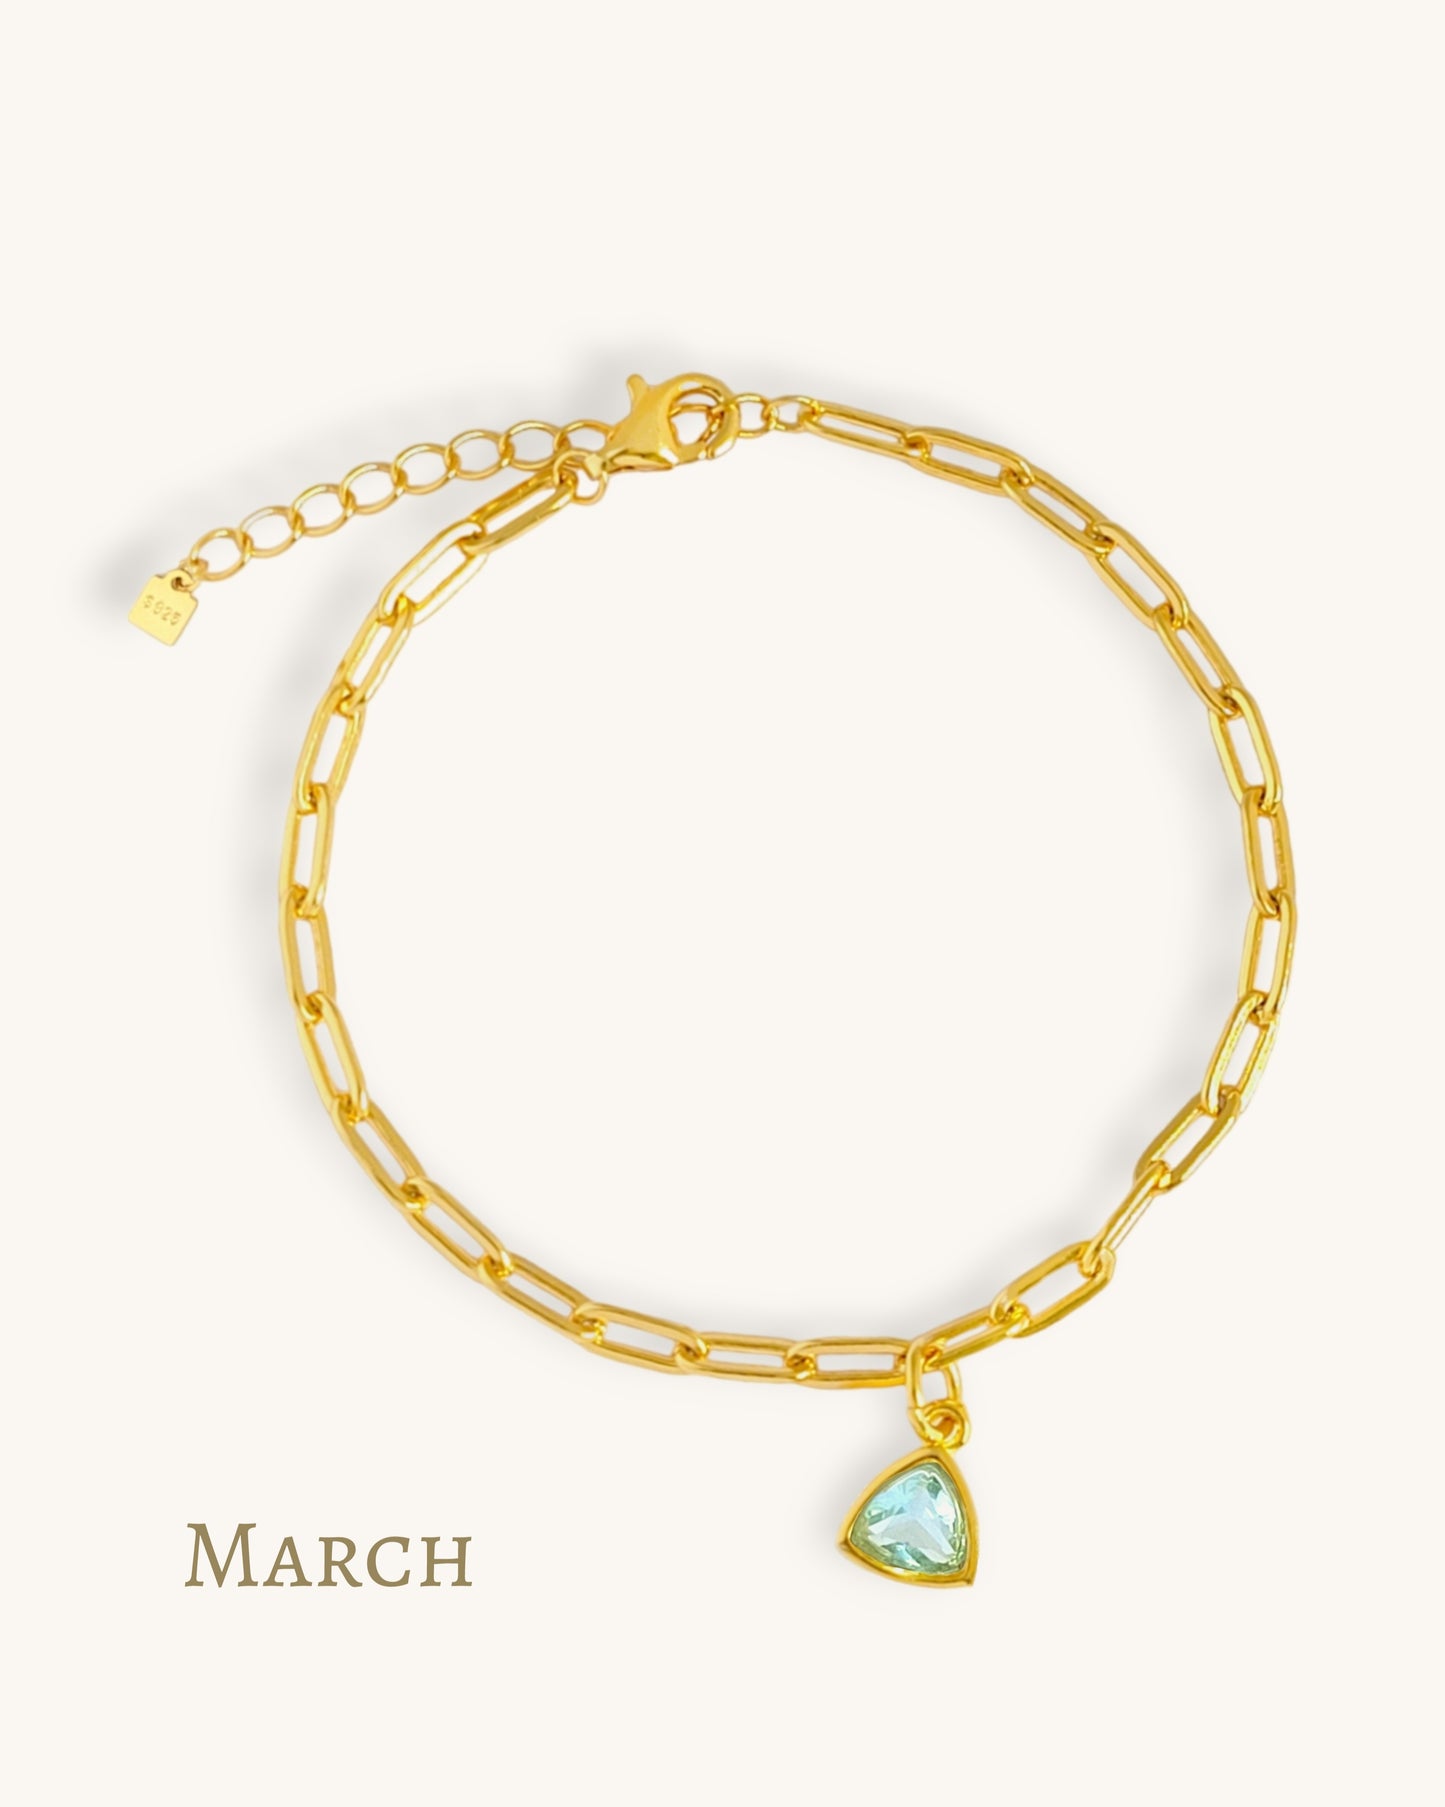 March Birthstone bracelet